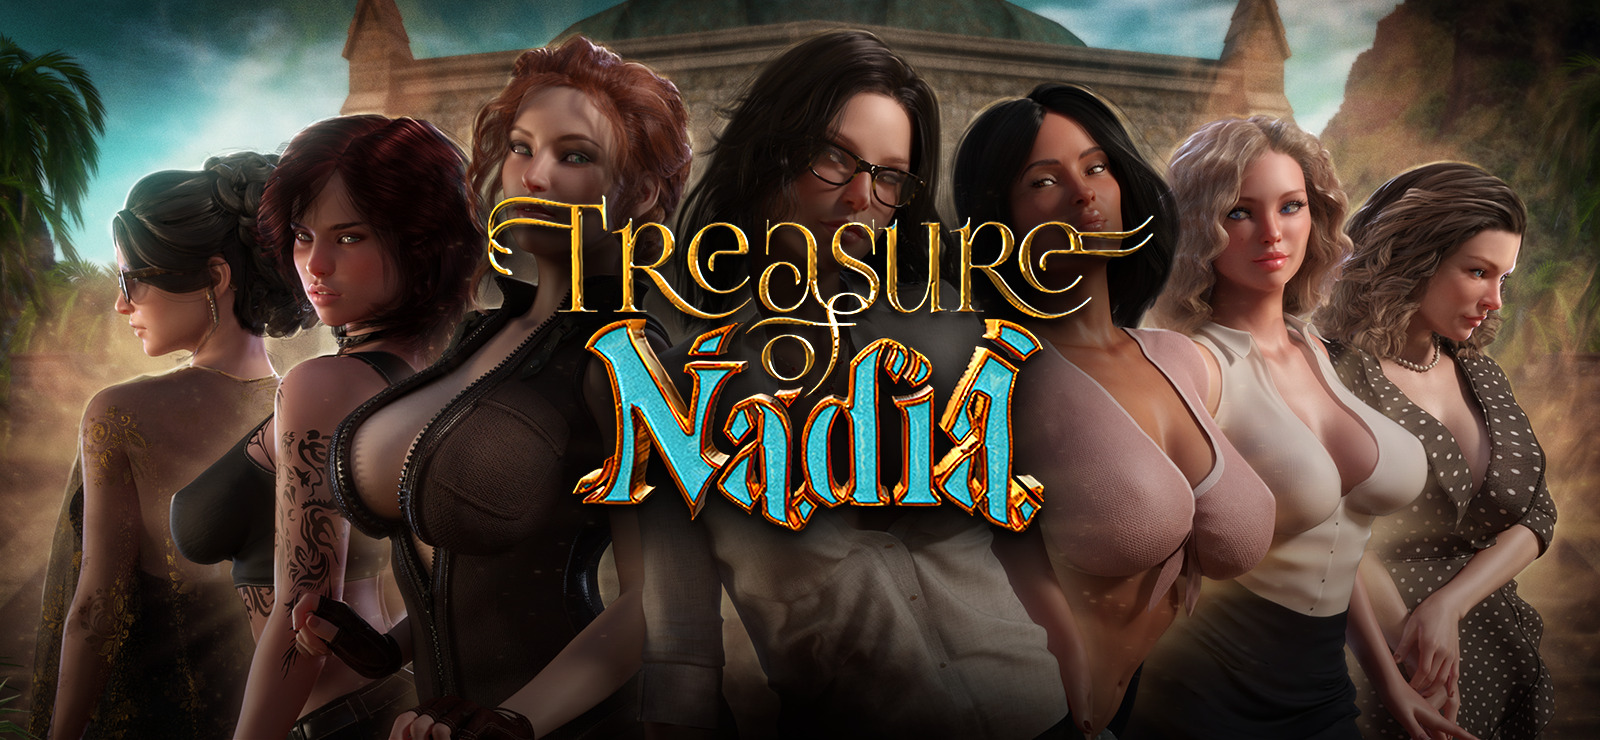 Treasures of nadia